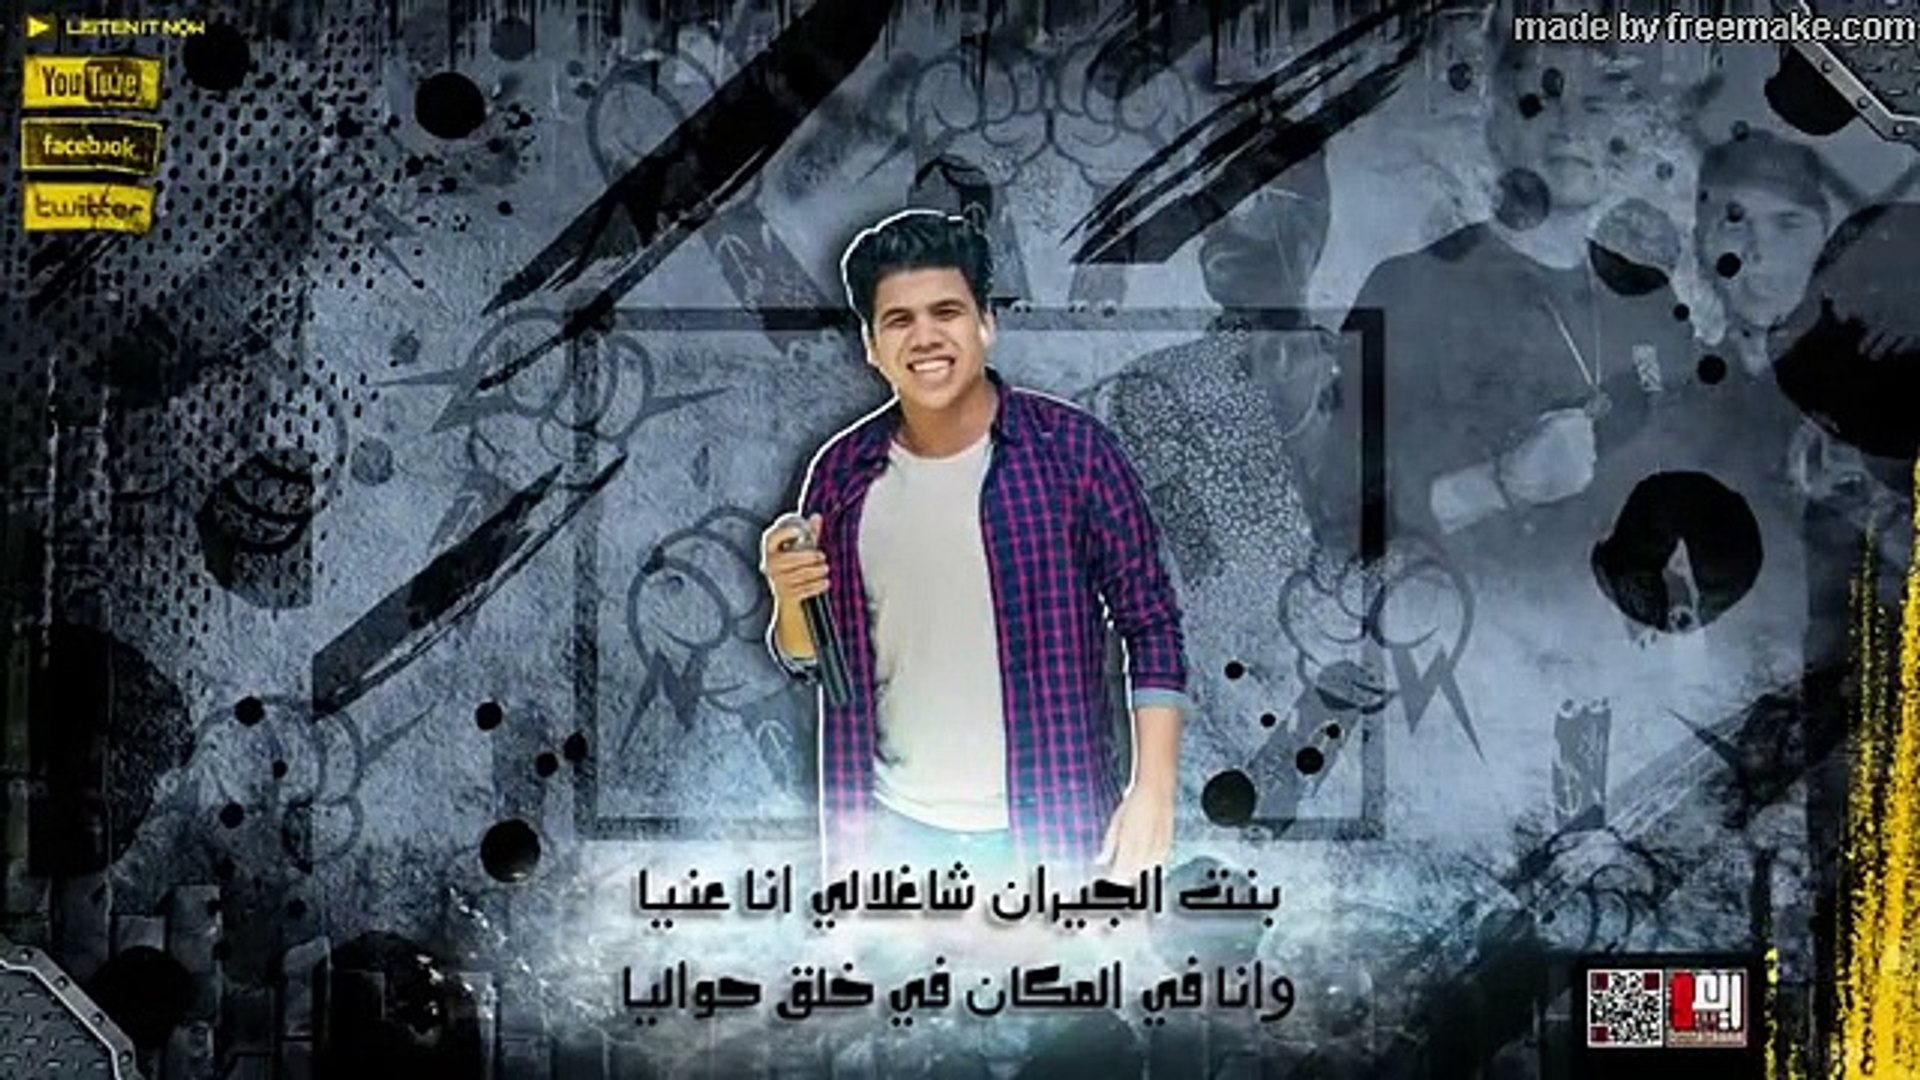 مهرجان بنت الجيران بهوايا انتي قاعده معايا حسن شاكوش و عمر كمال - video  Dailymotion